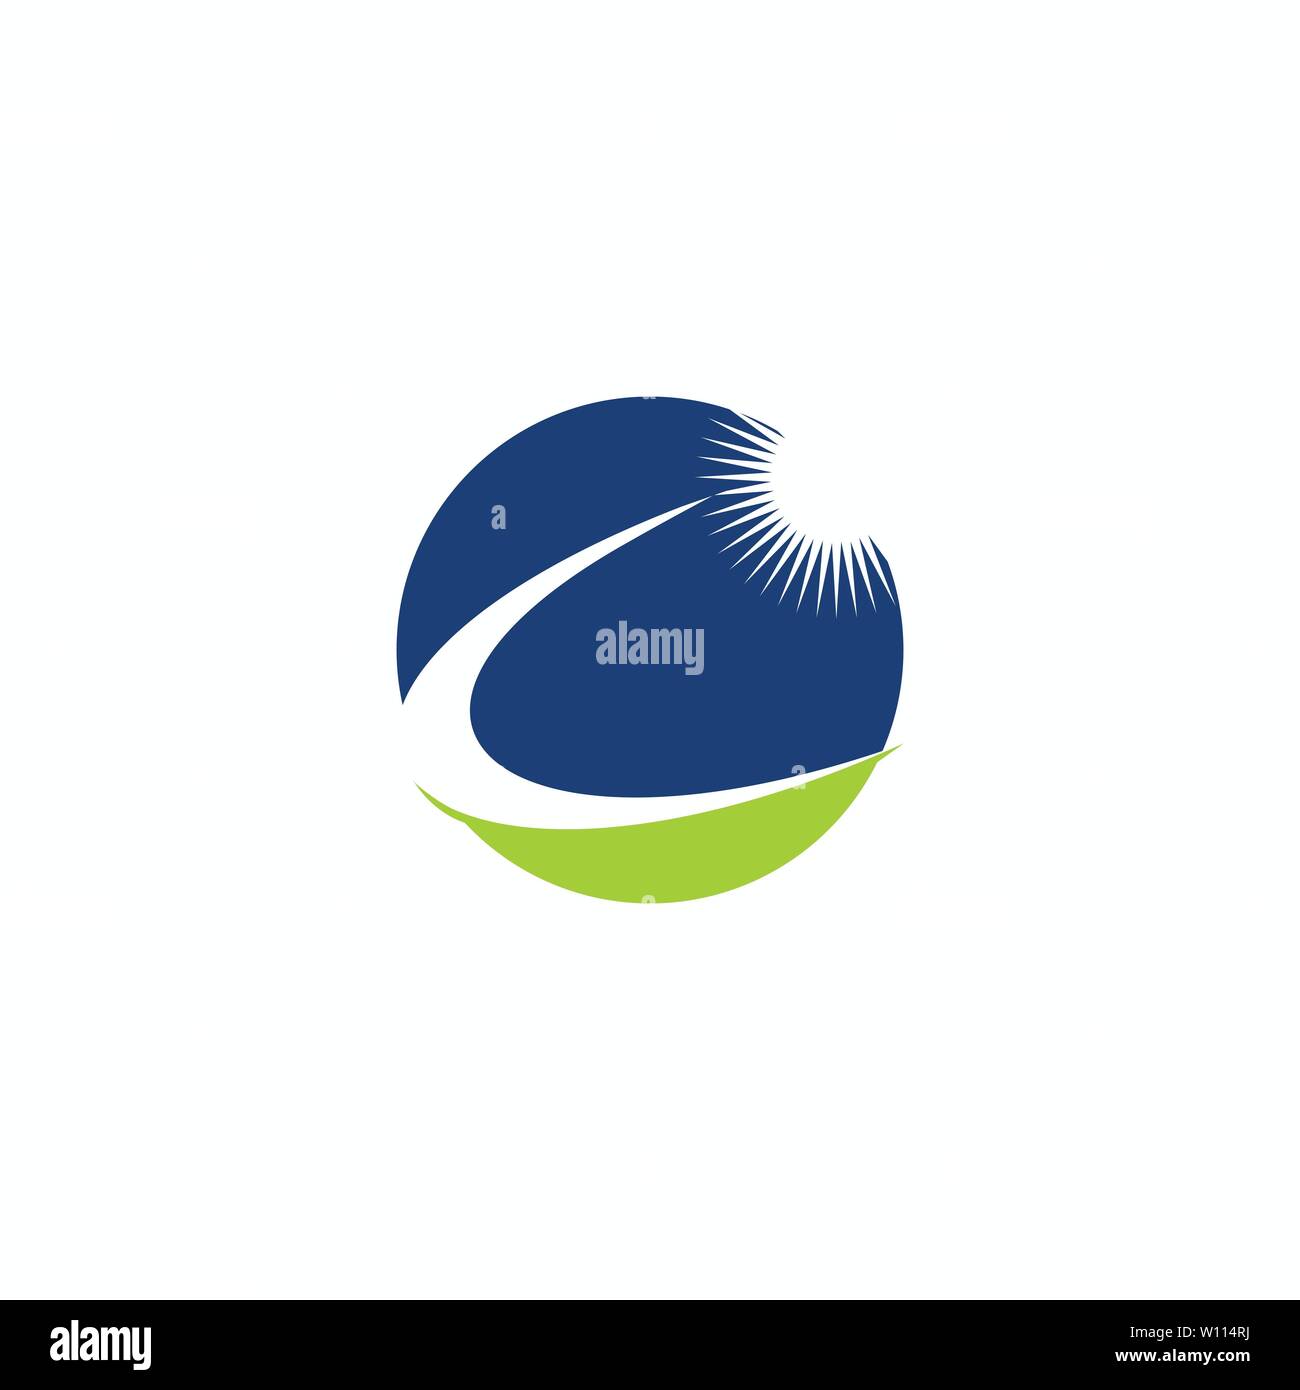 Sun Peak über das Haus Logo Design Stock Vektor